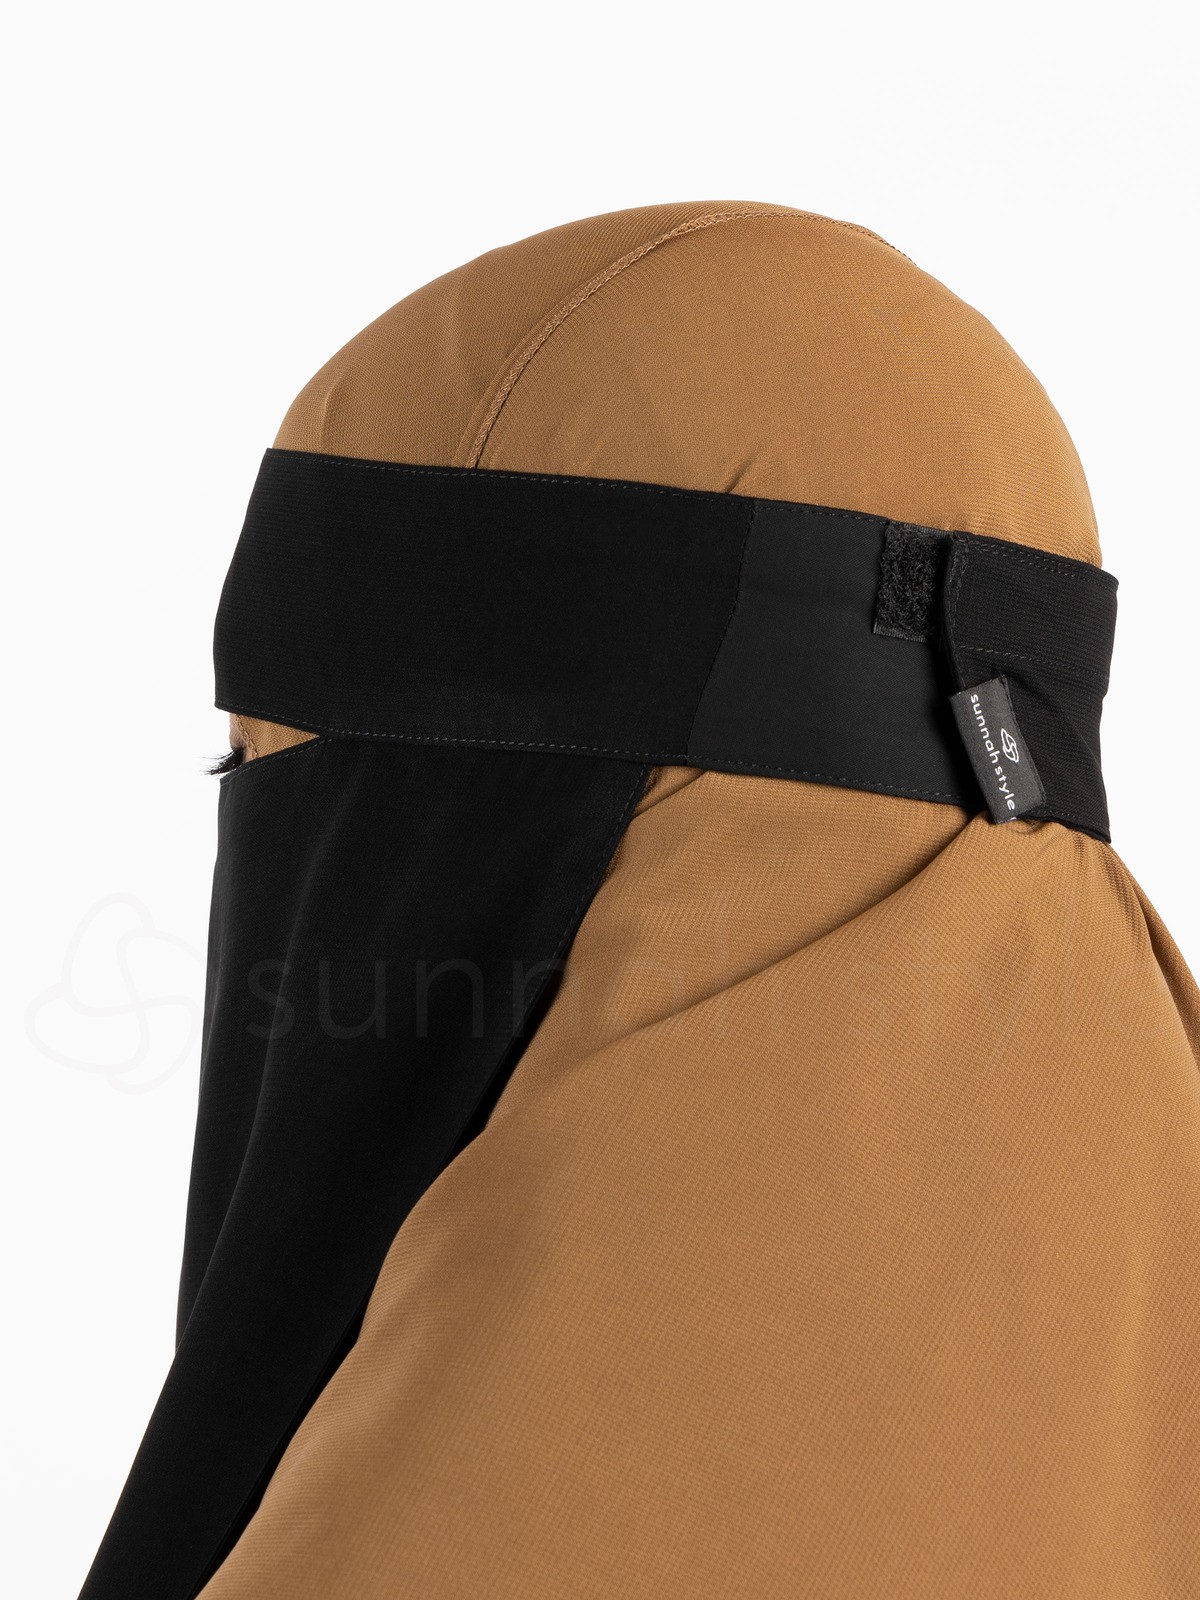 Sunnah Style - One Layer Velcro Niqab (Black)